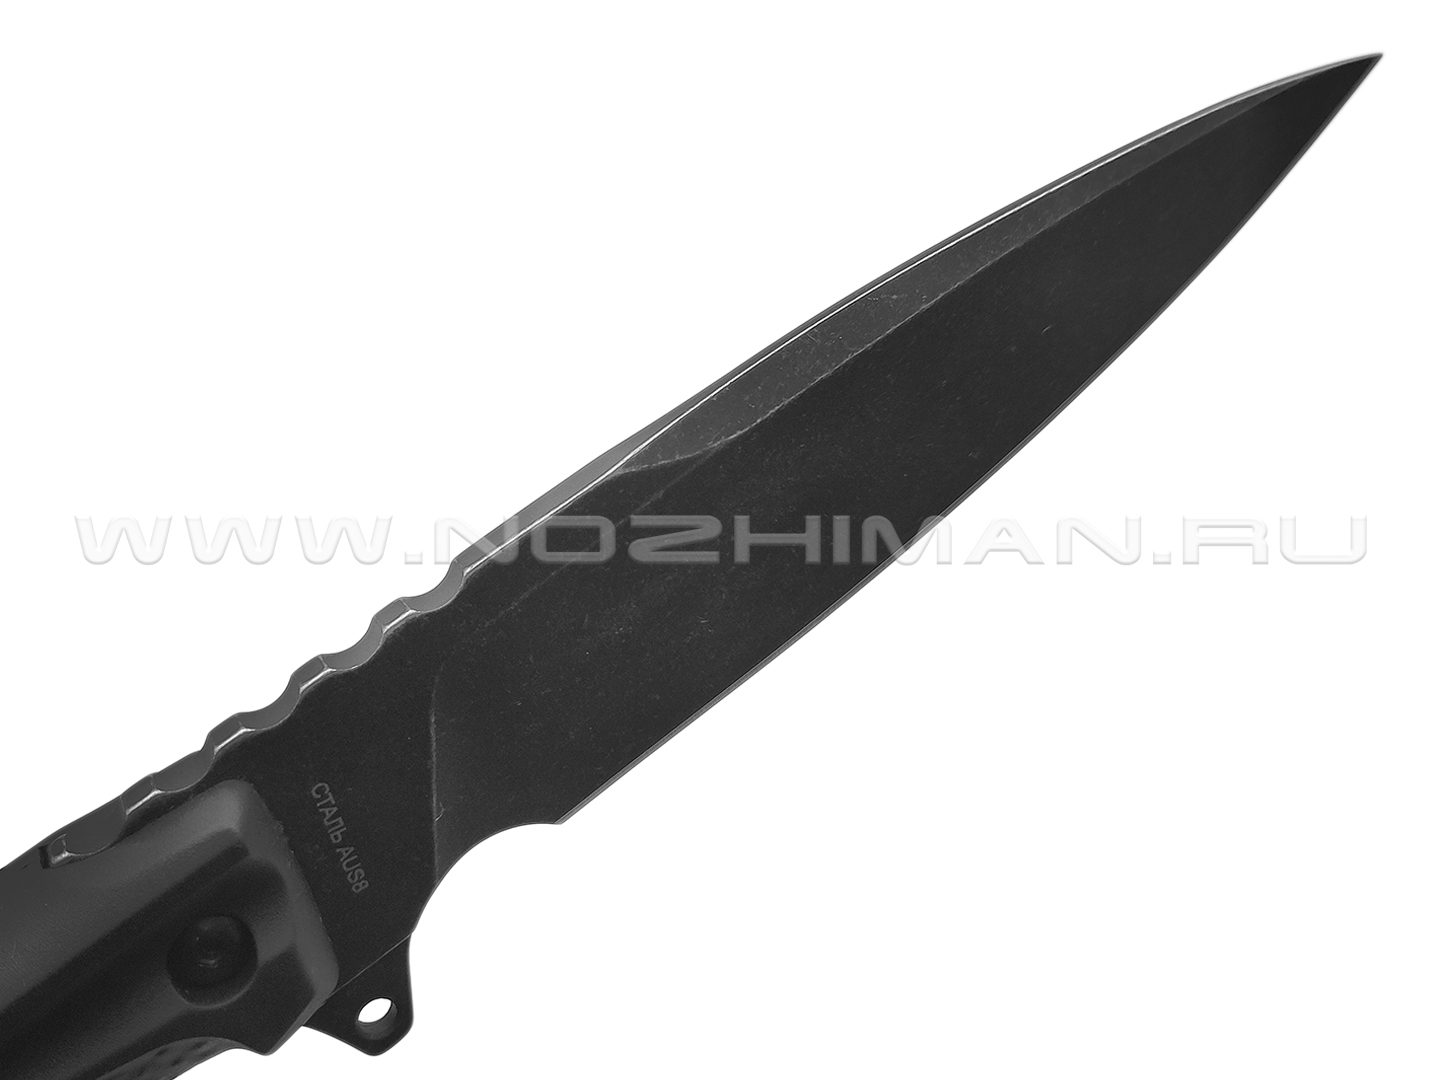 Нокс нож Антей-3 605-589821 сталь Aus-8 blackwash, рукоять Elastron black